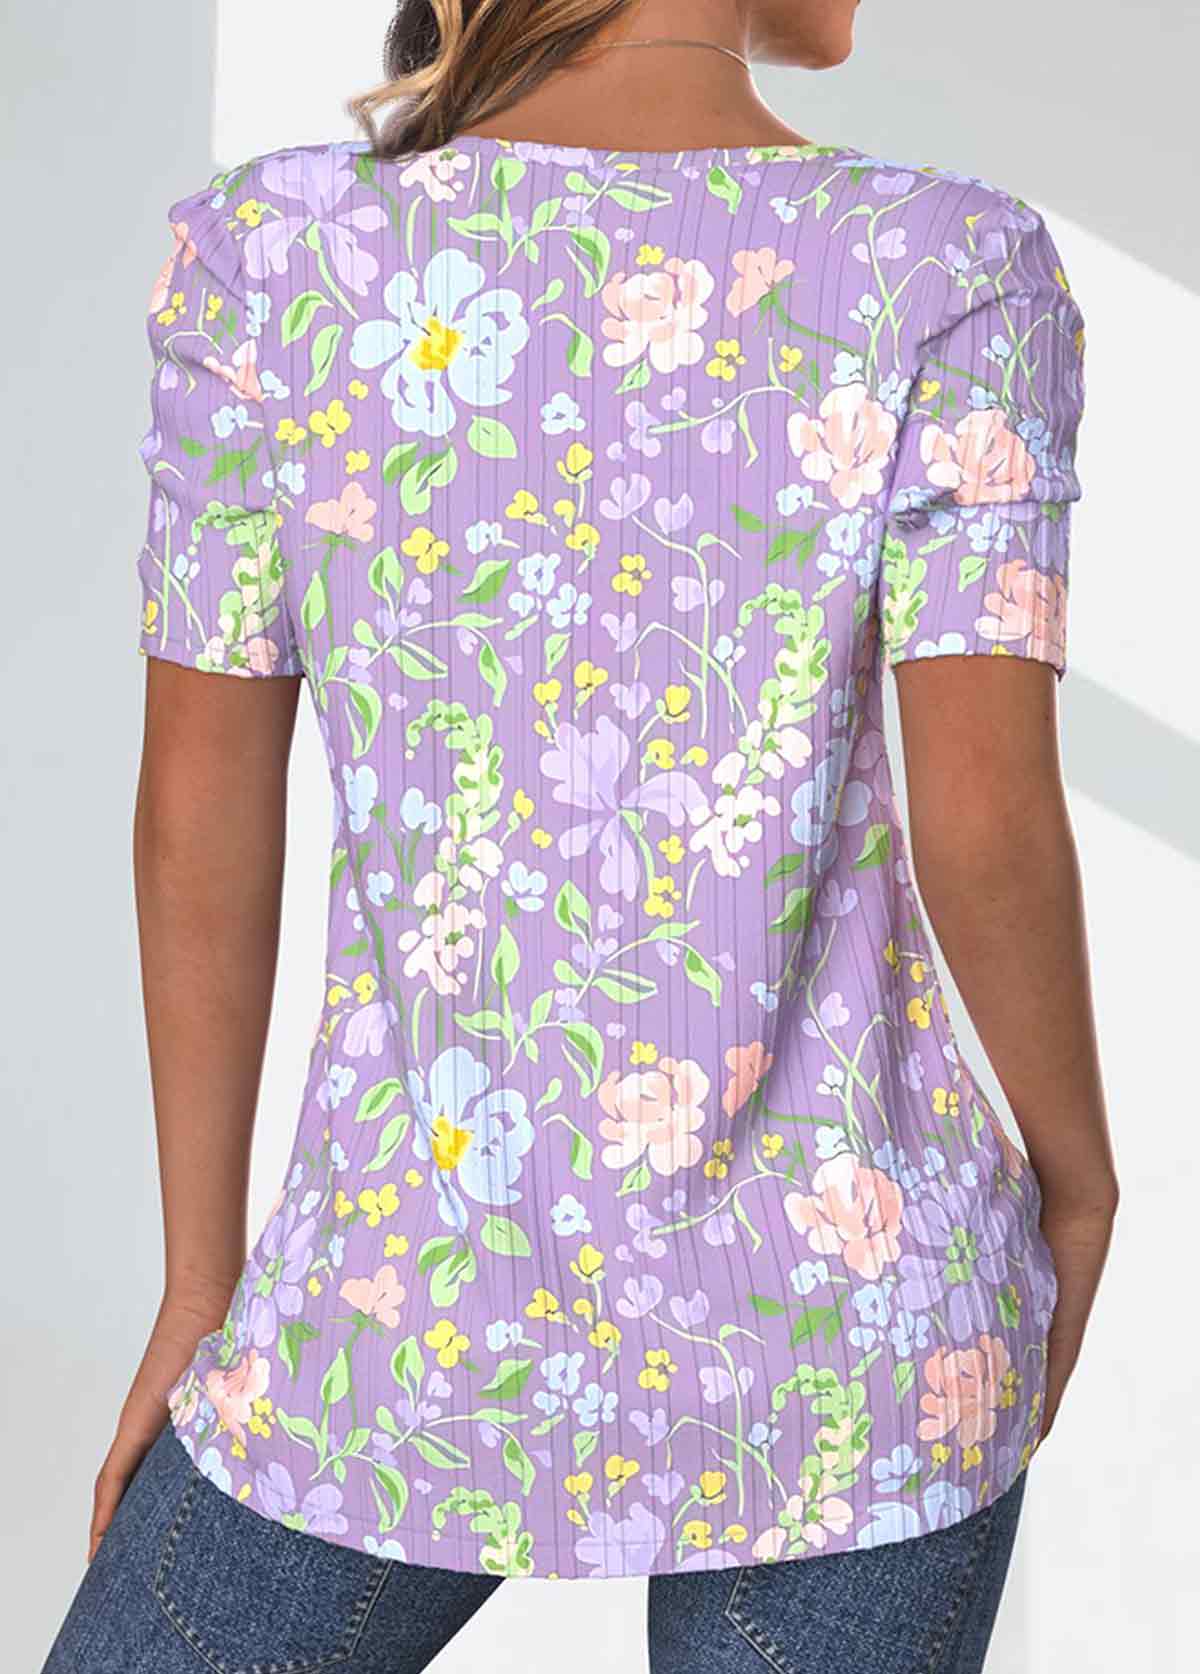 Ditsy Floral Print Textured Fabric Light Purple T Shirt